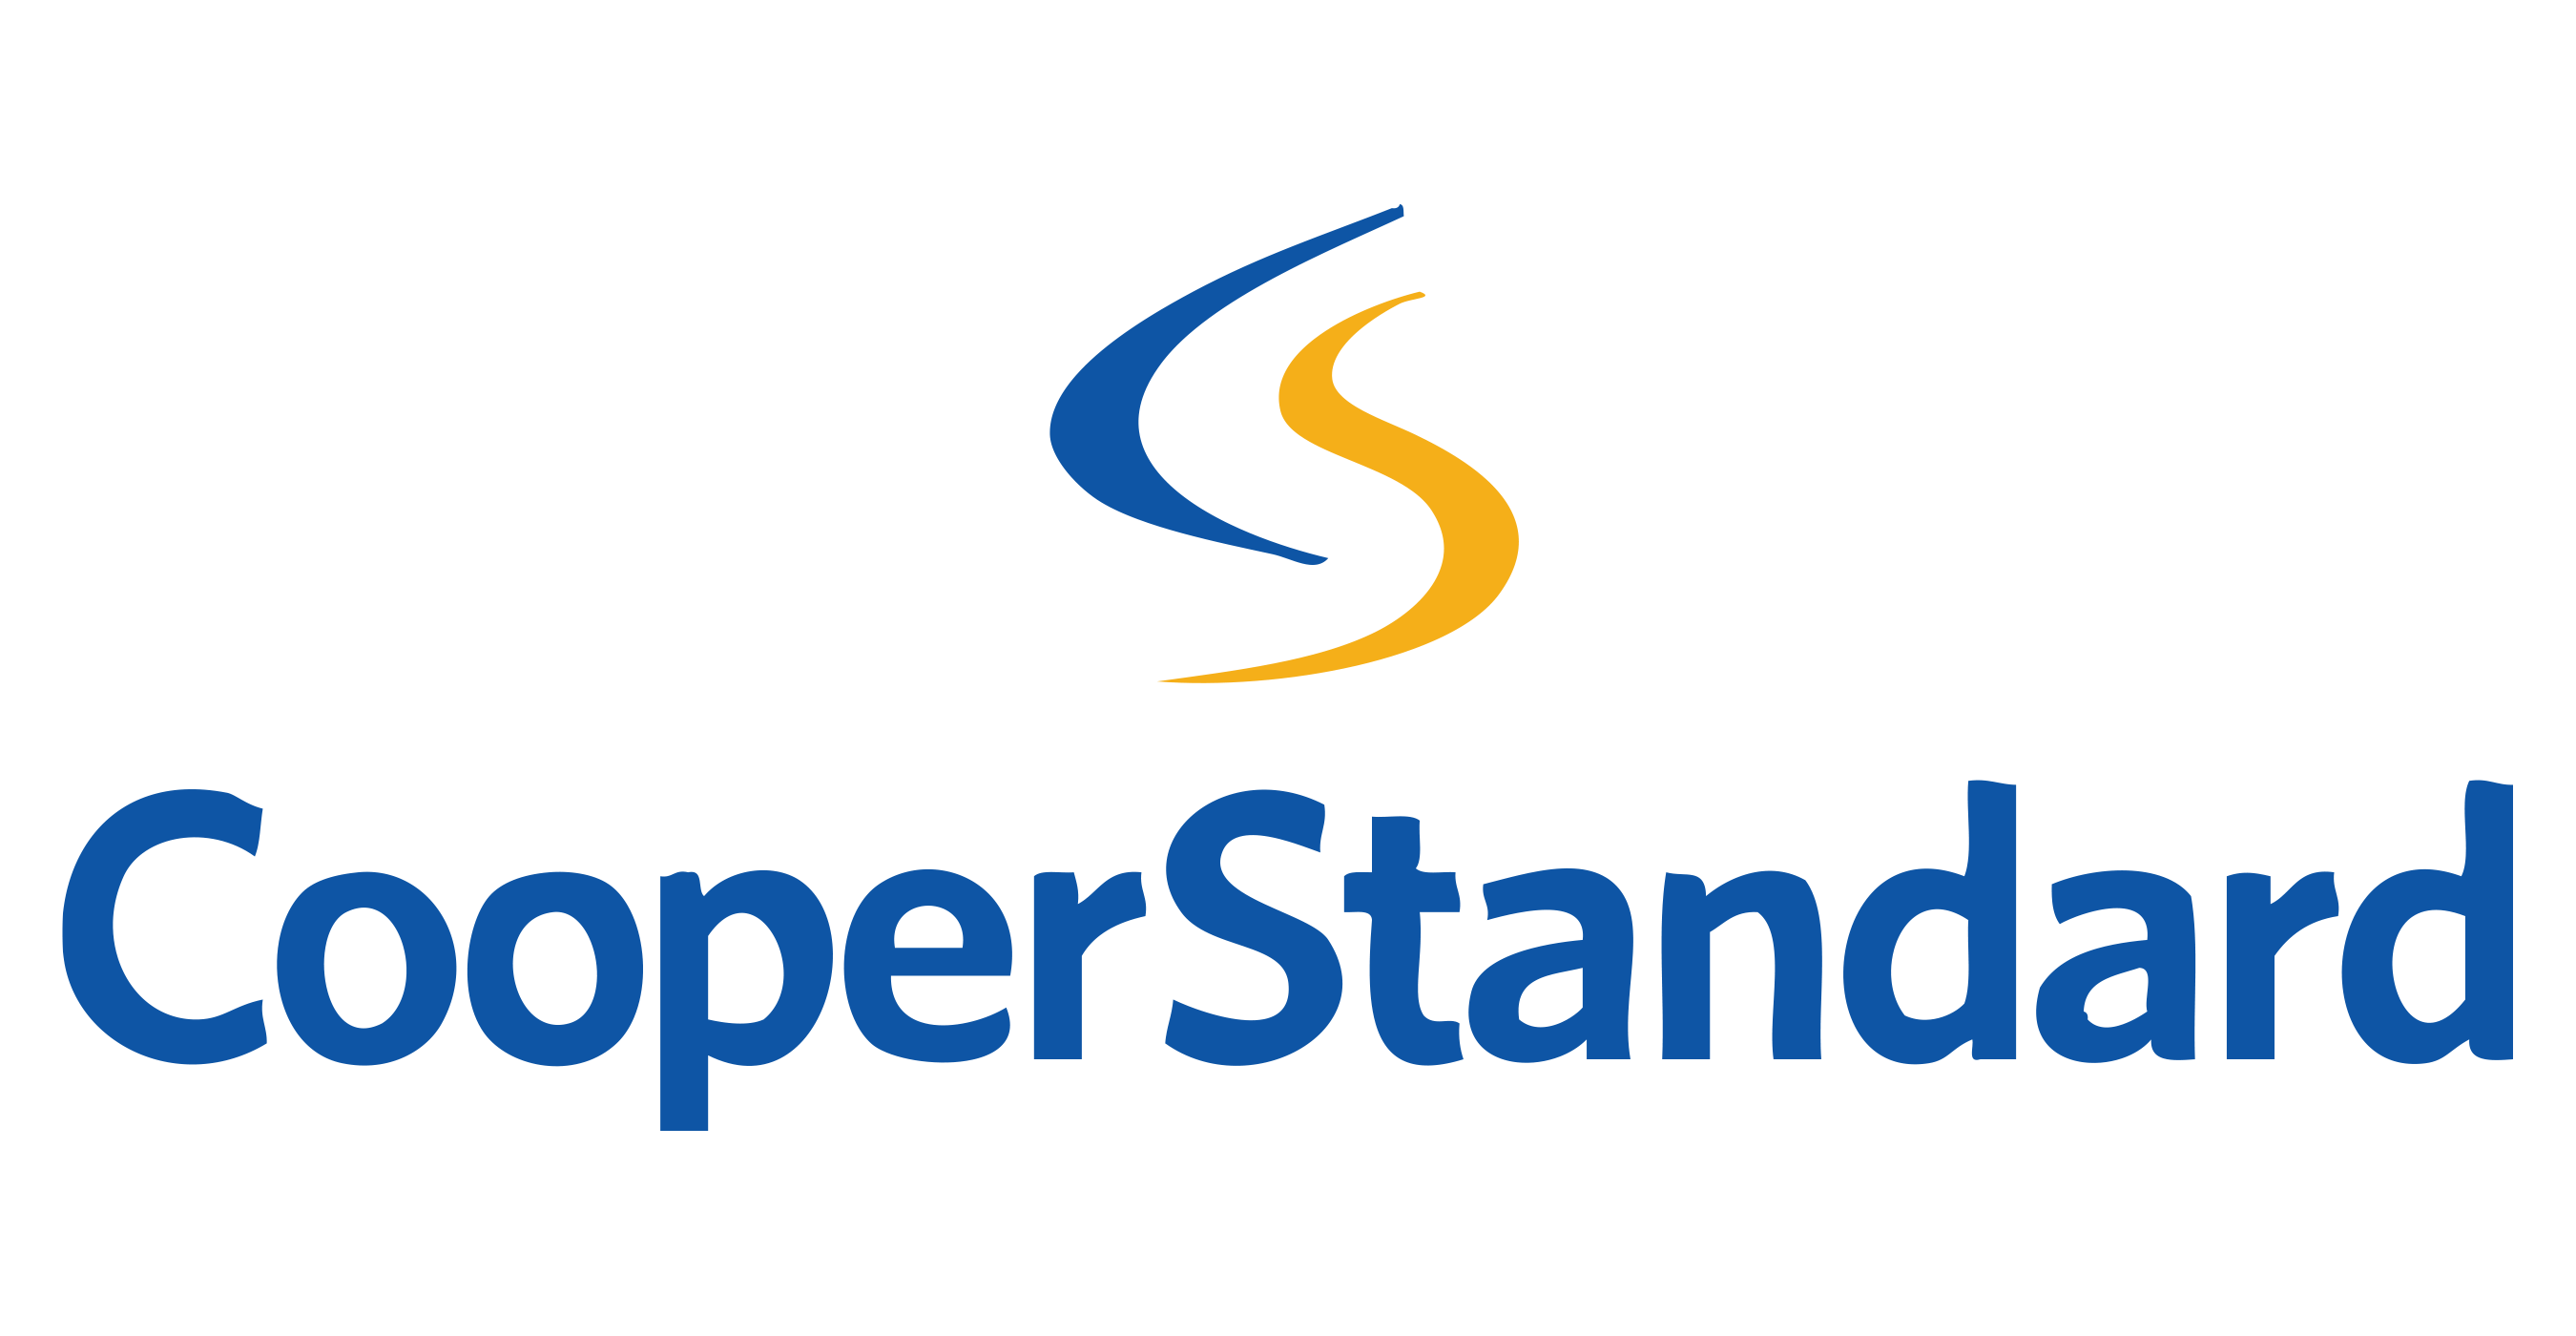 Cooper Standard Automotive Logo - Cooper Standard Employee Offer - Michigan International Speedway